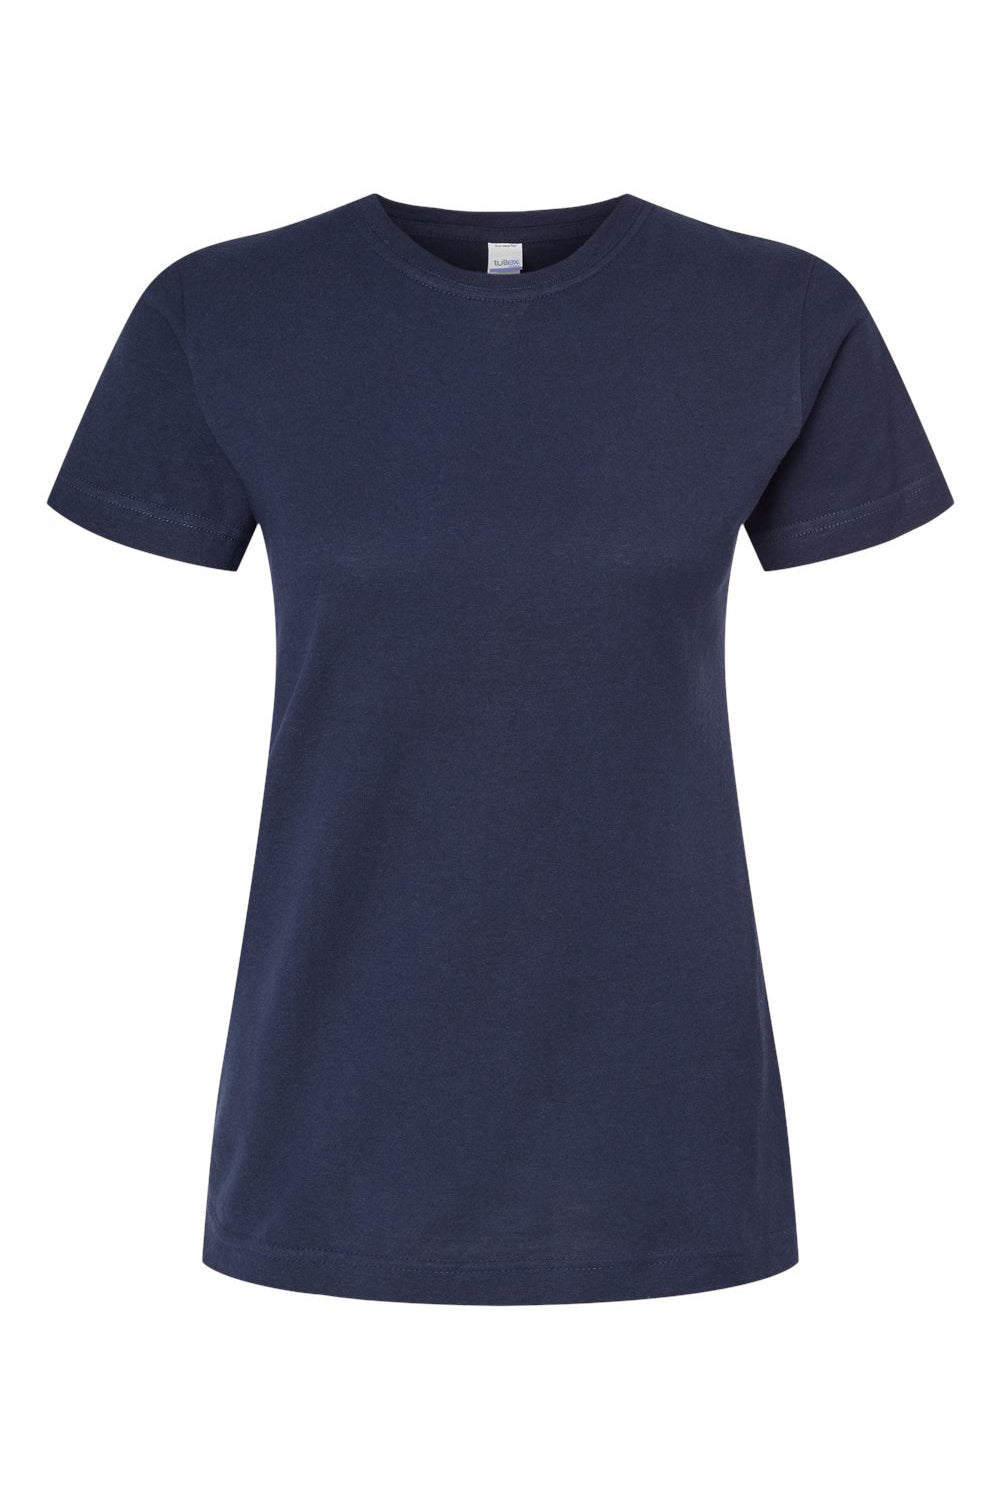 Tultex 216 Womens Fine Jersey Classic Fit Short Sleeve Crewneck T-Shirt Navy Blue Flat Front